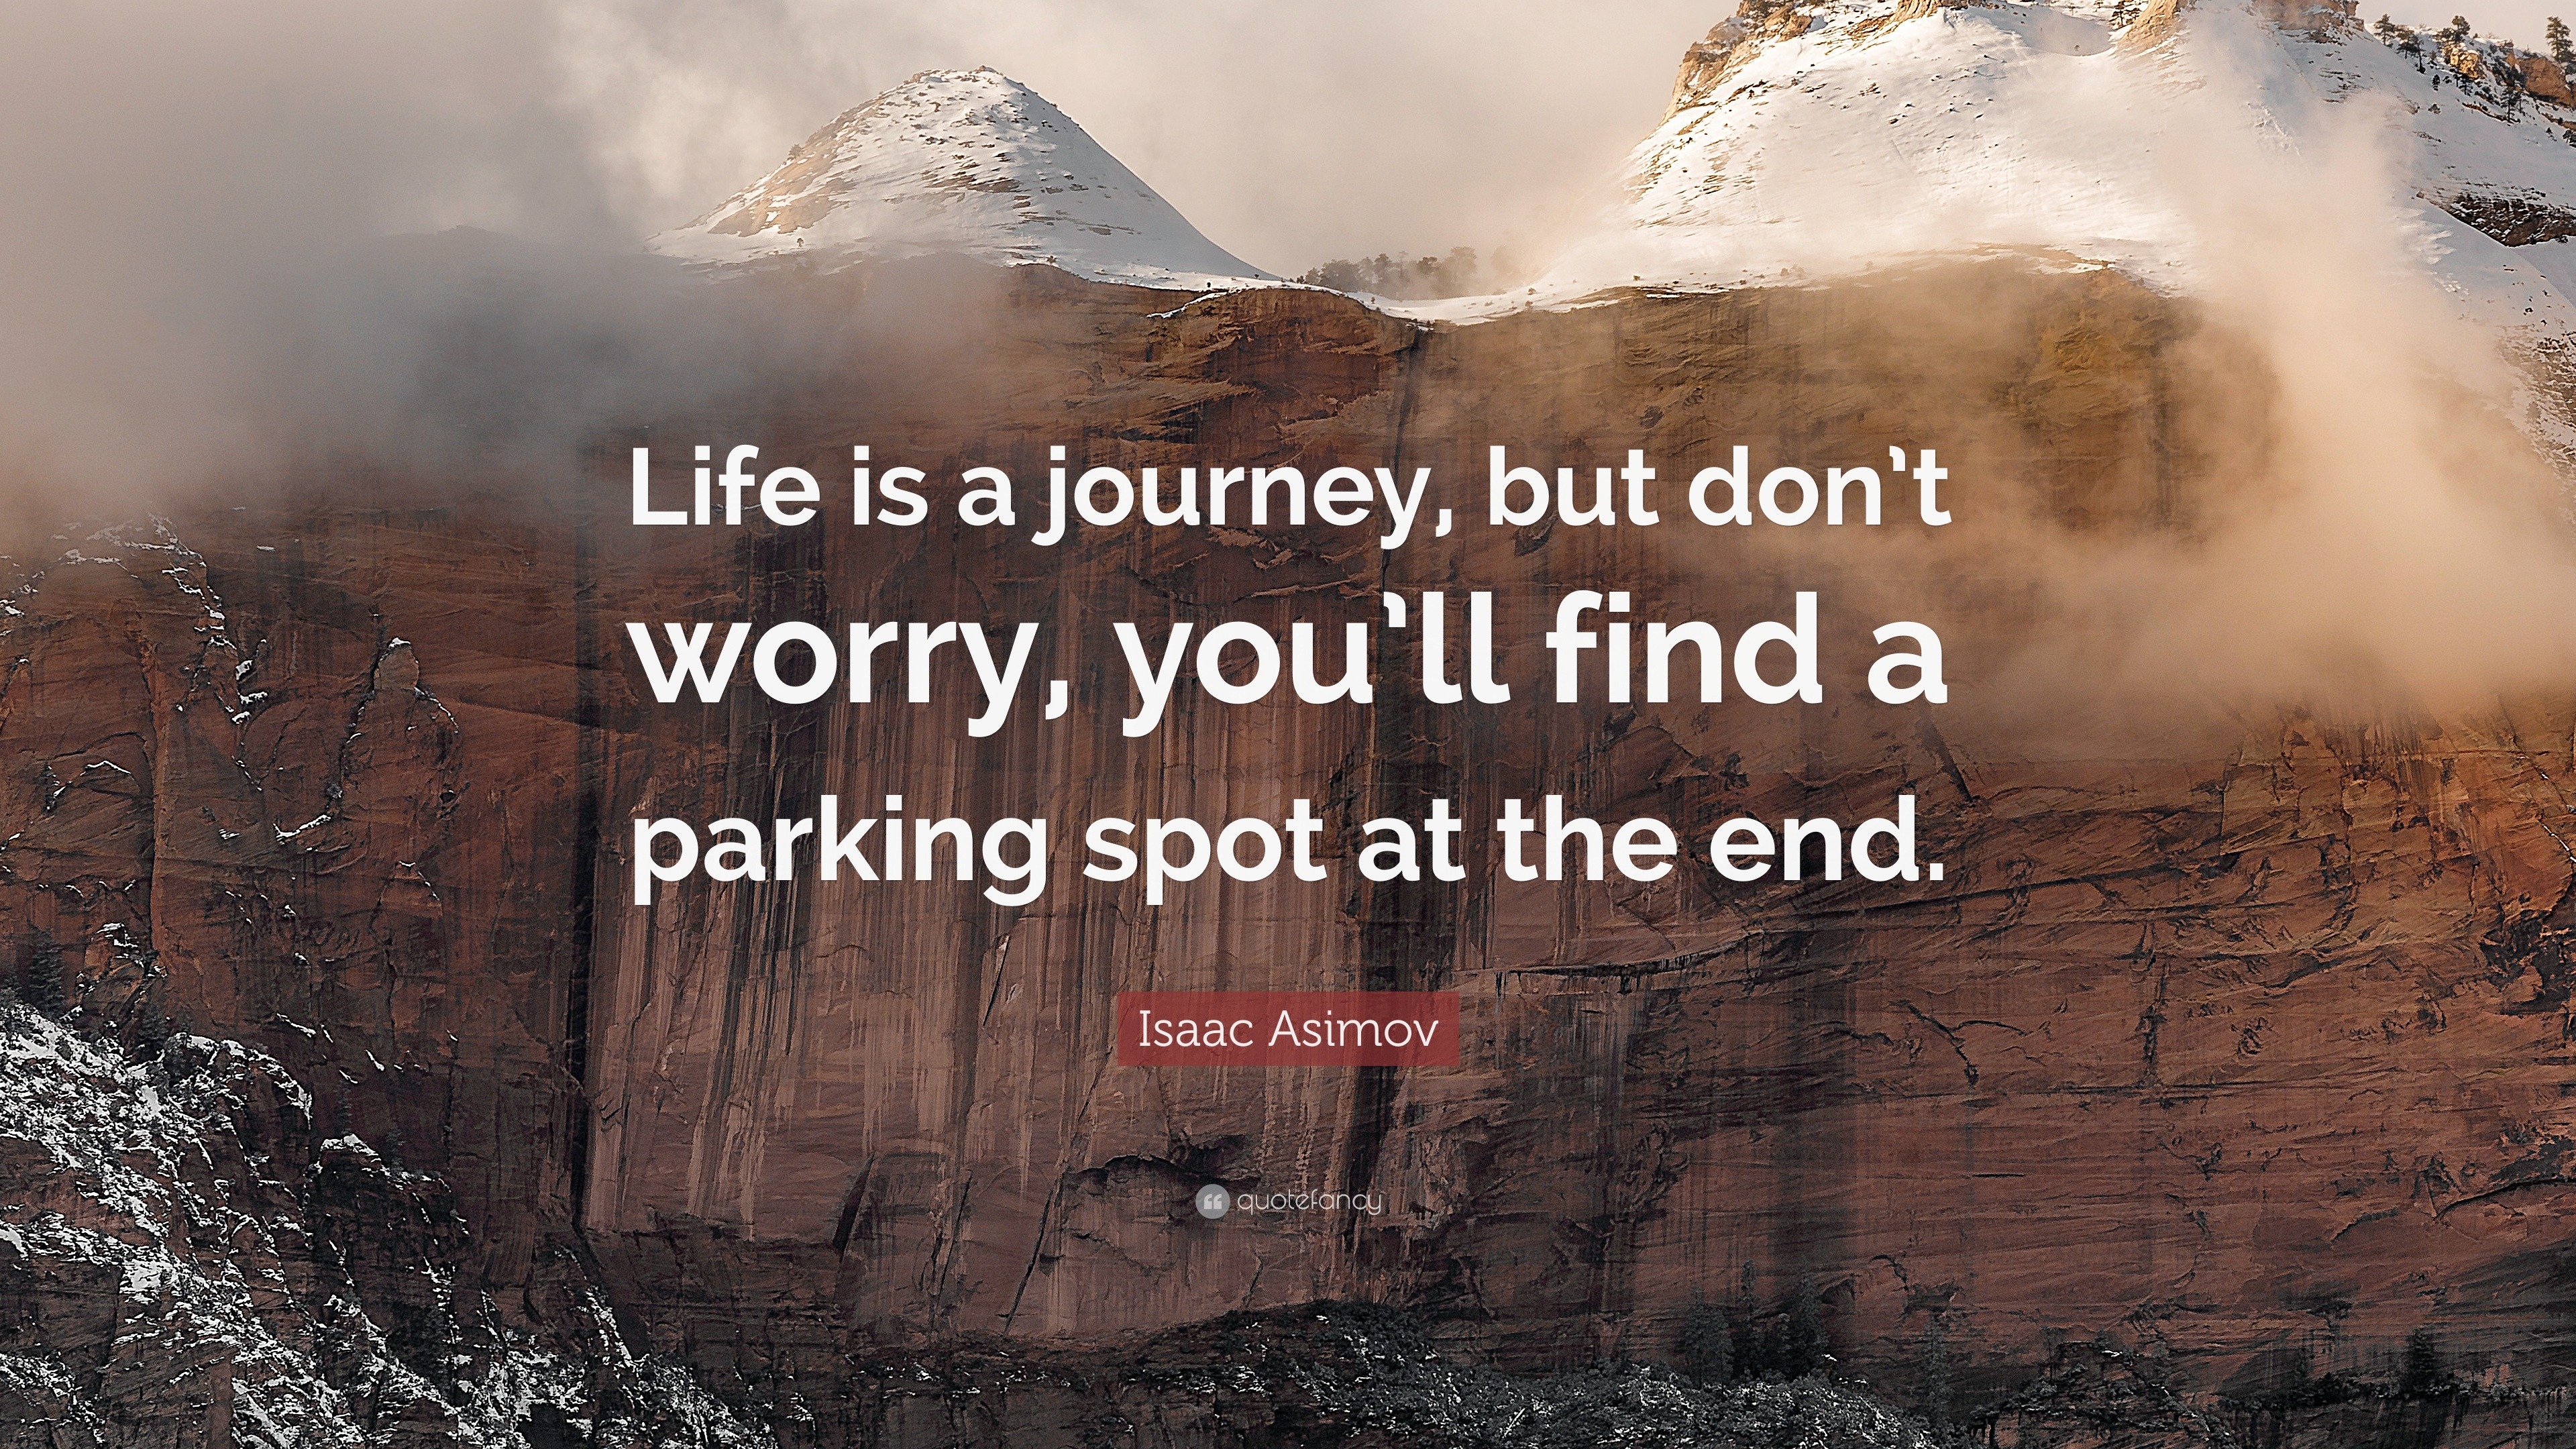 lifes a journey quotes